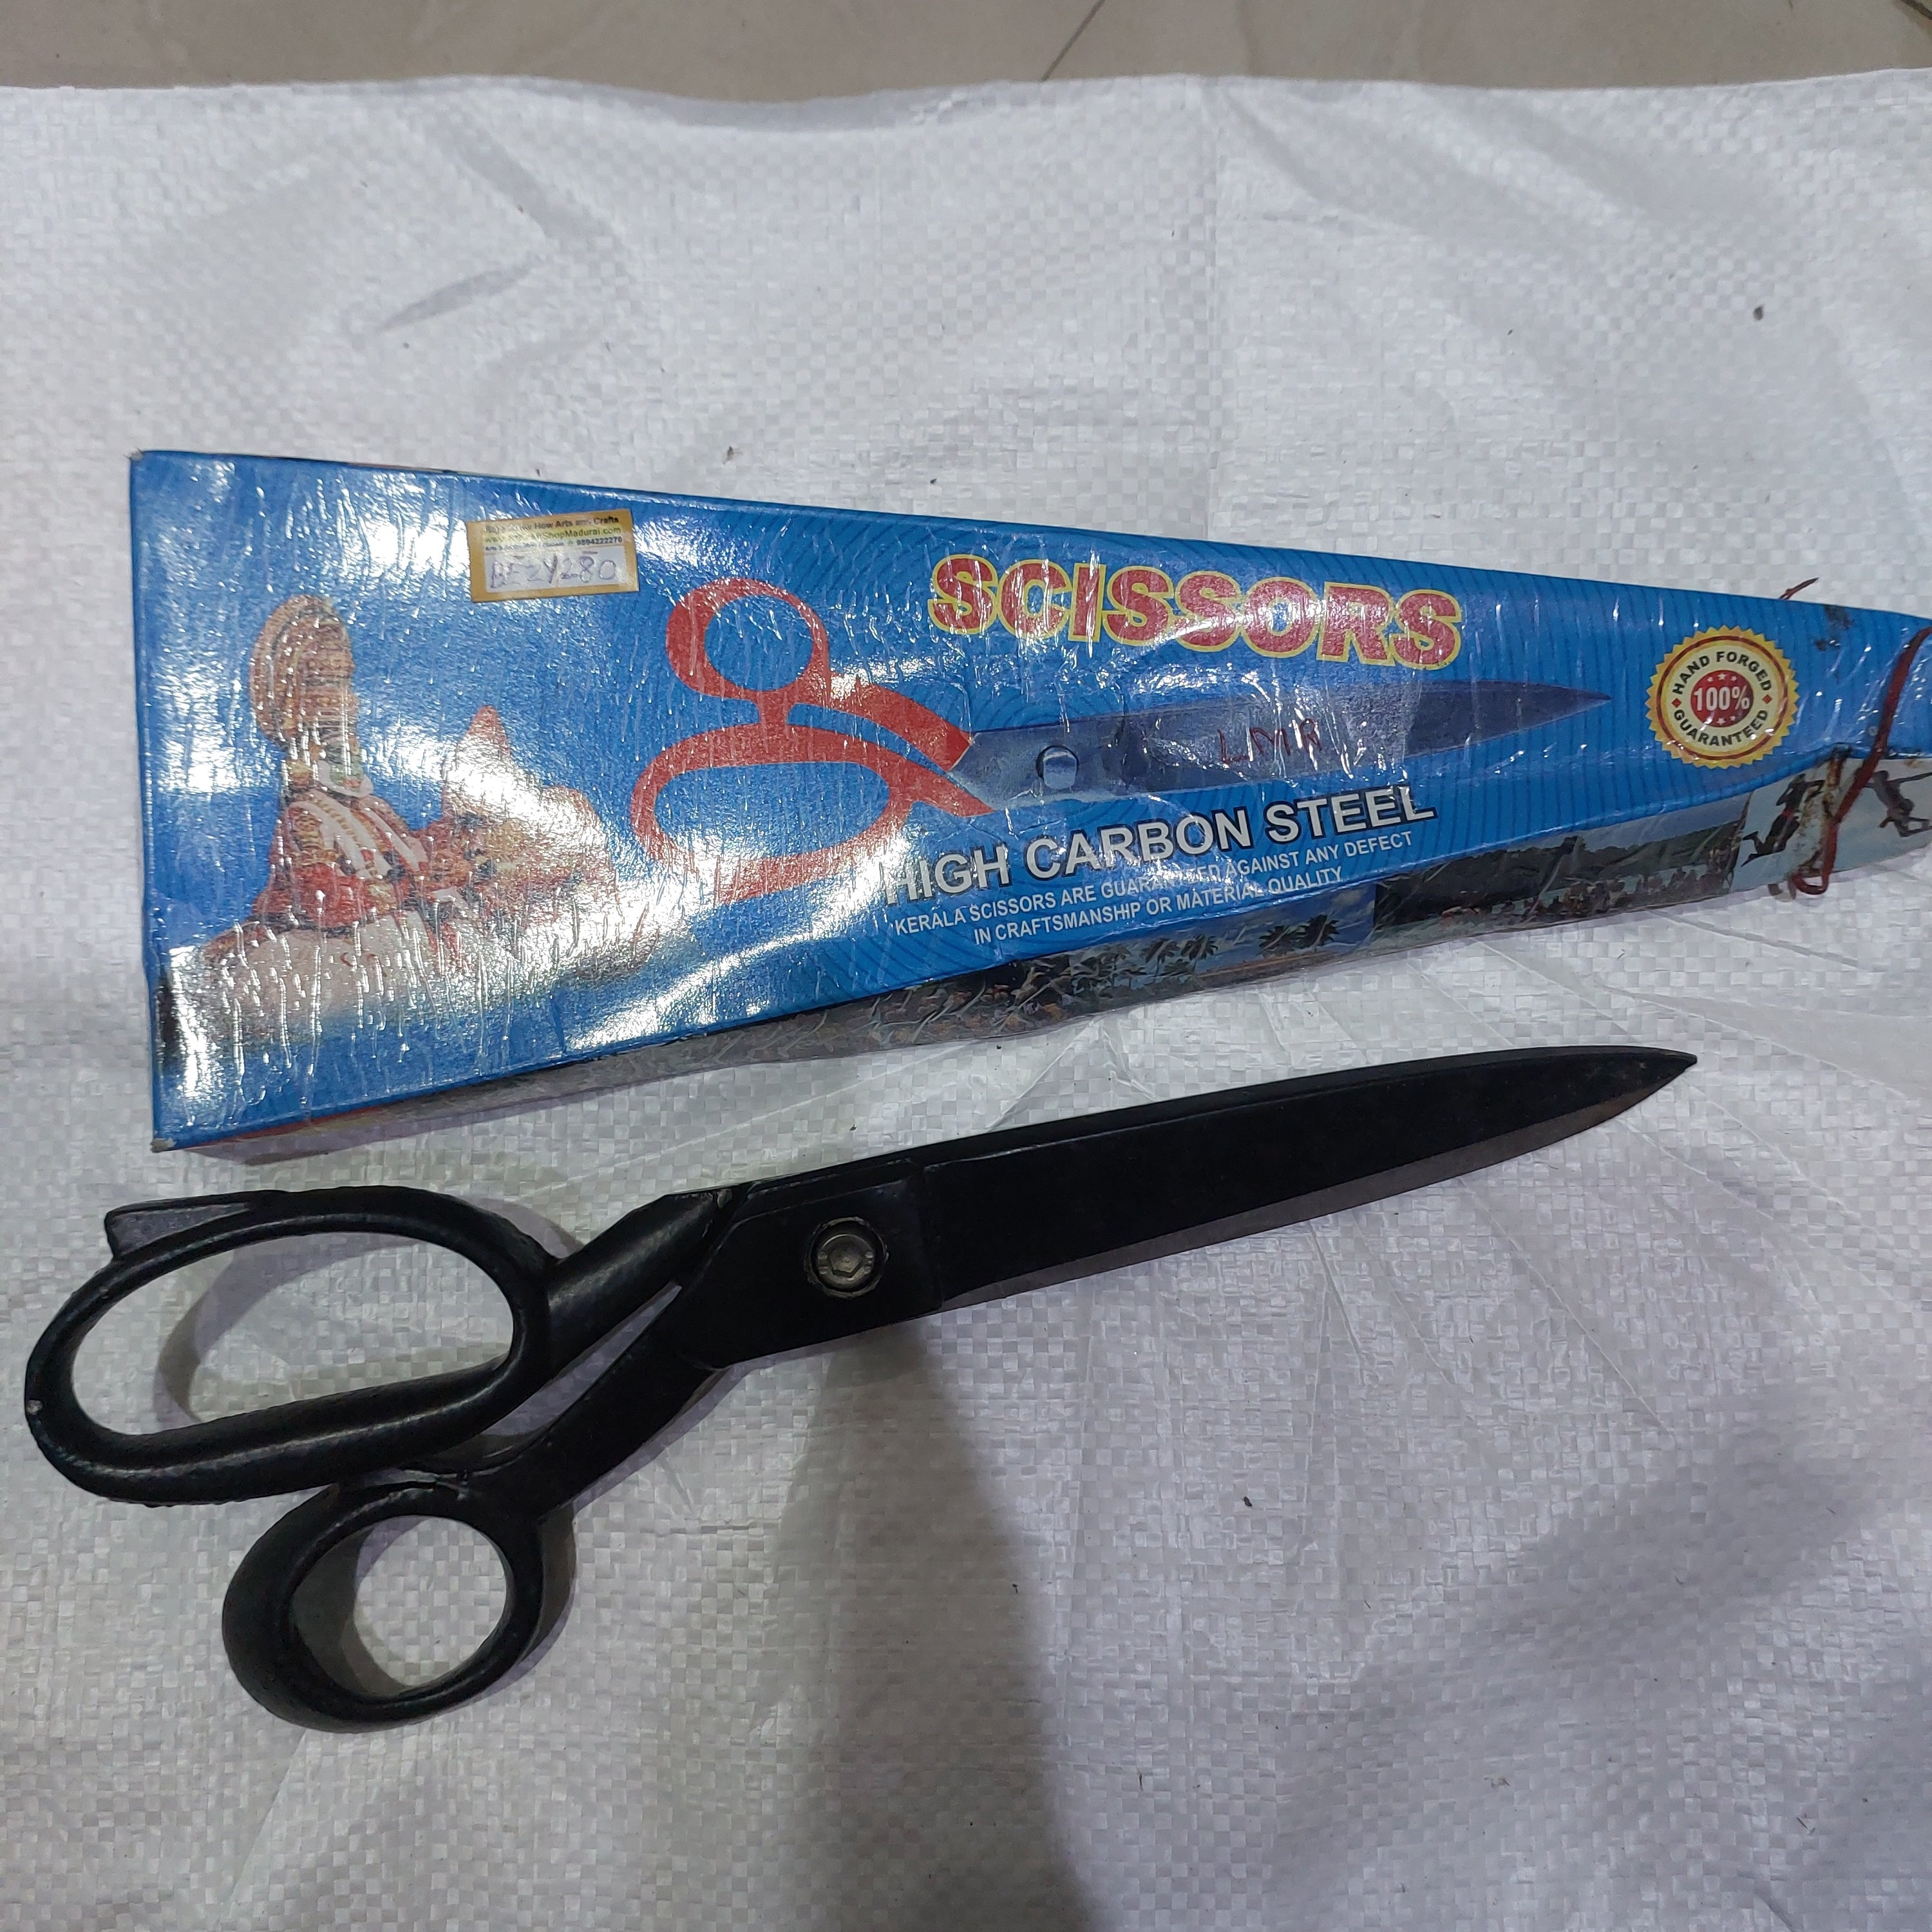 Kerala scissors